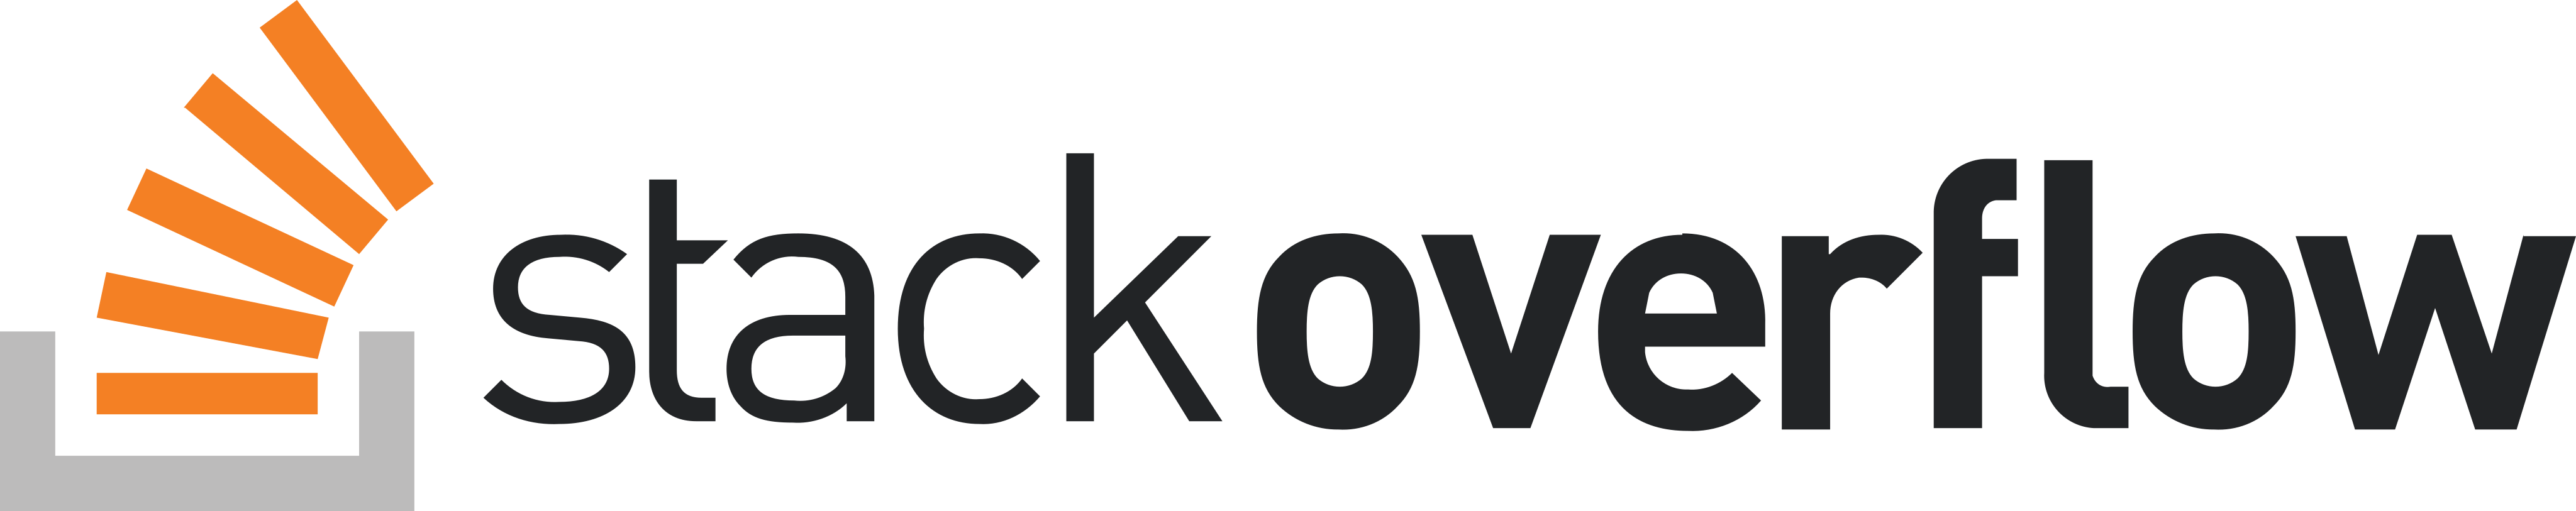 Stack Overflow Logo.